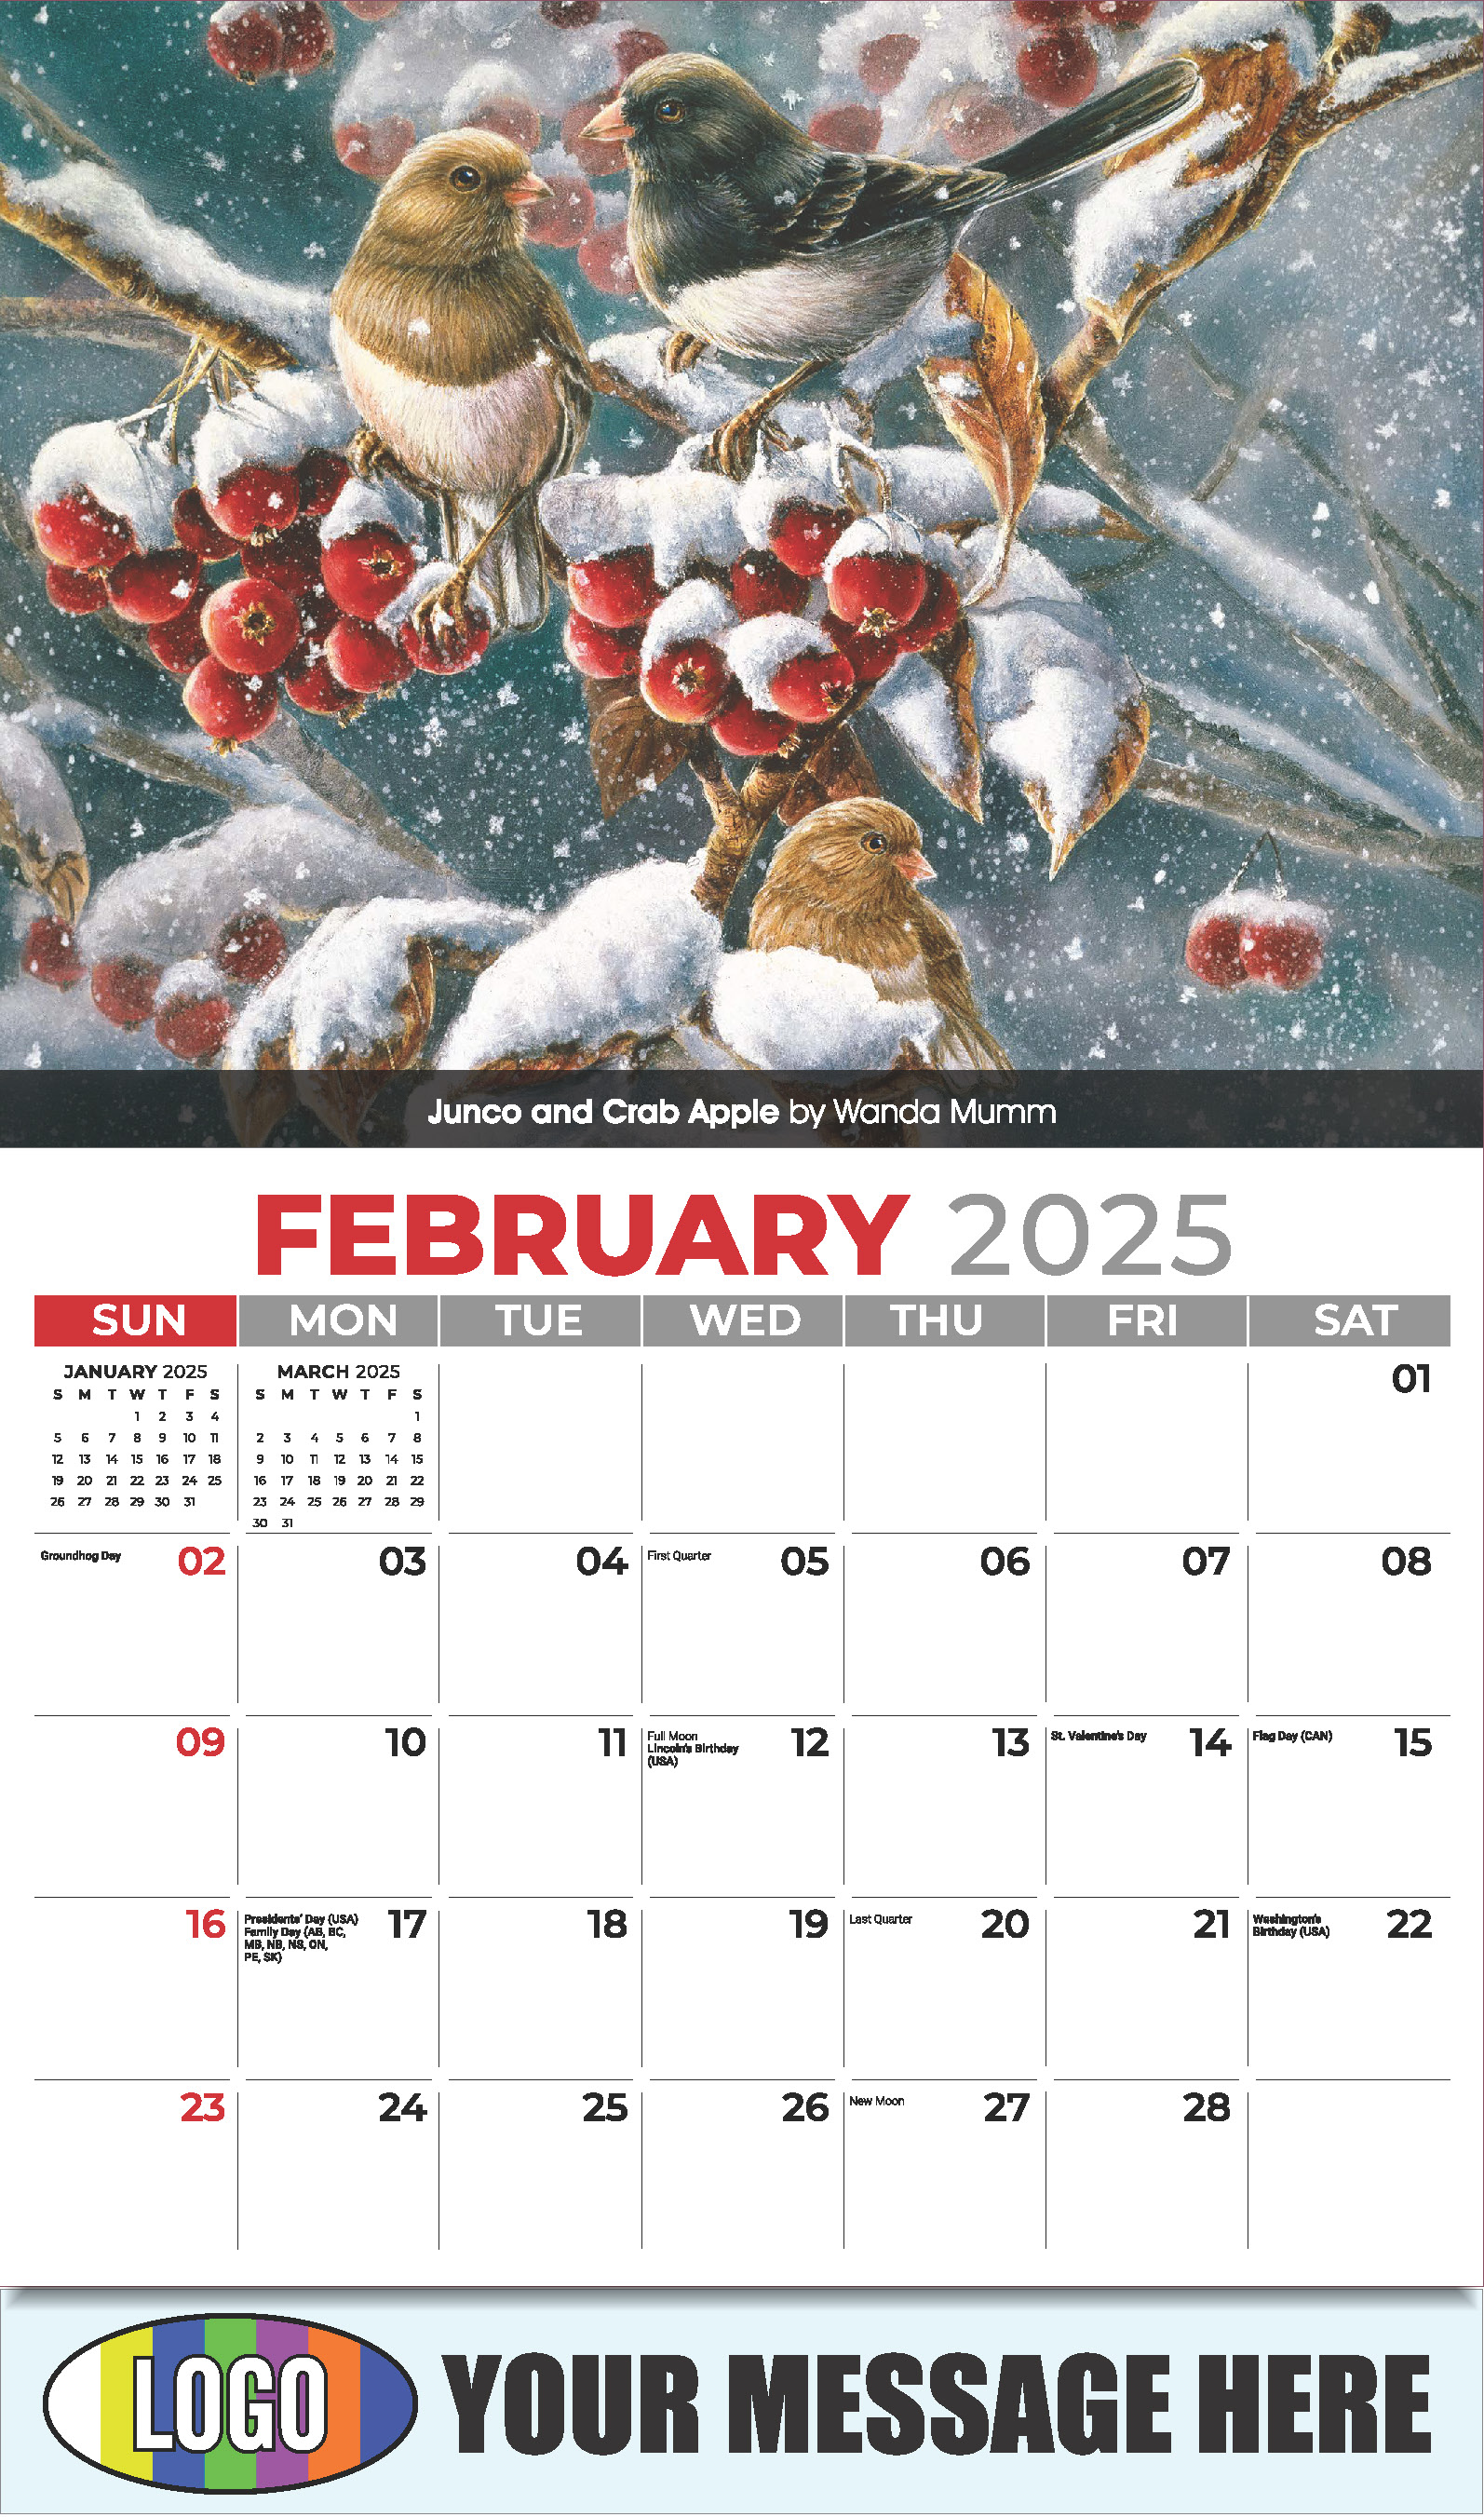 Garden Birds 2025 Business Promotional Calendar - February